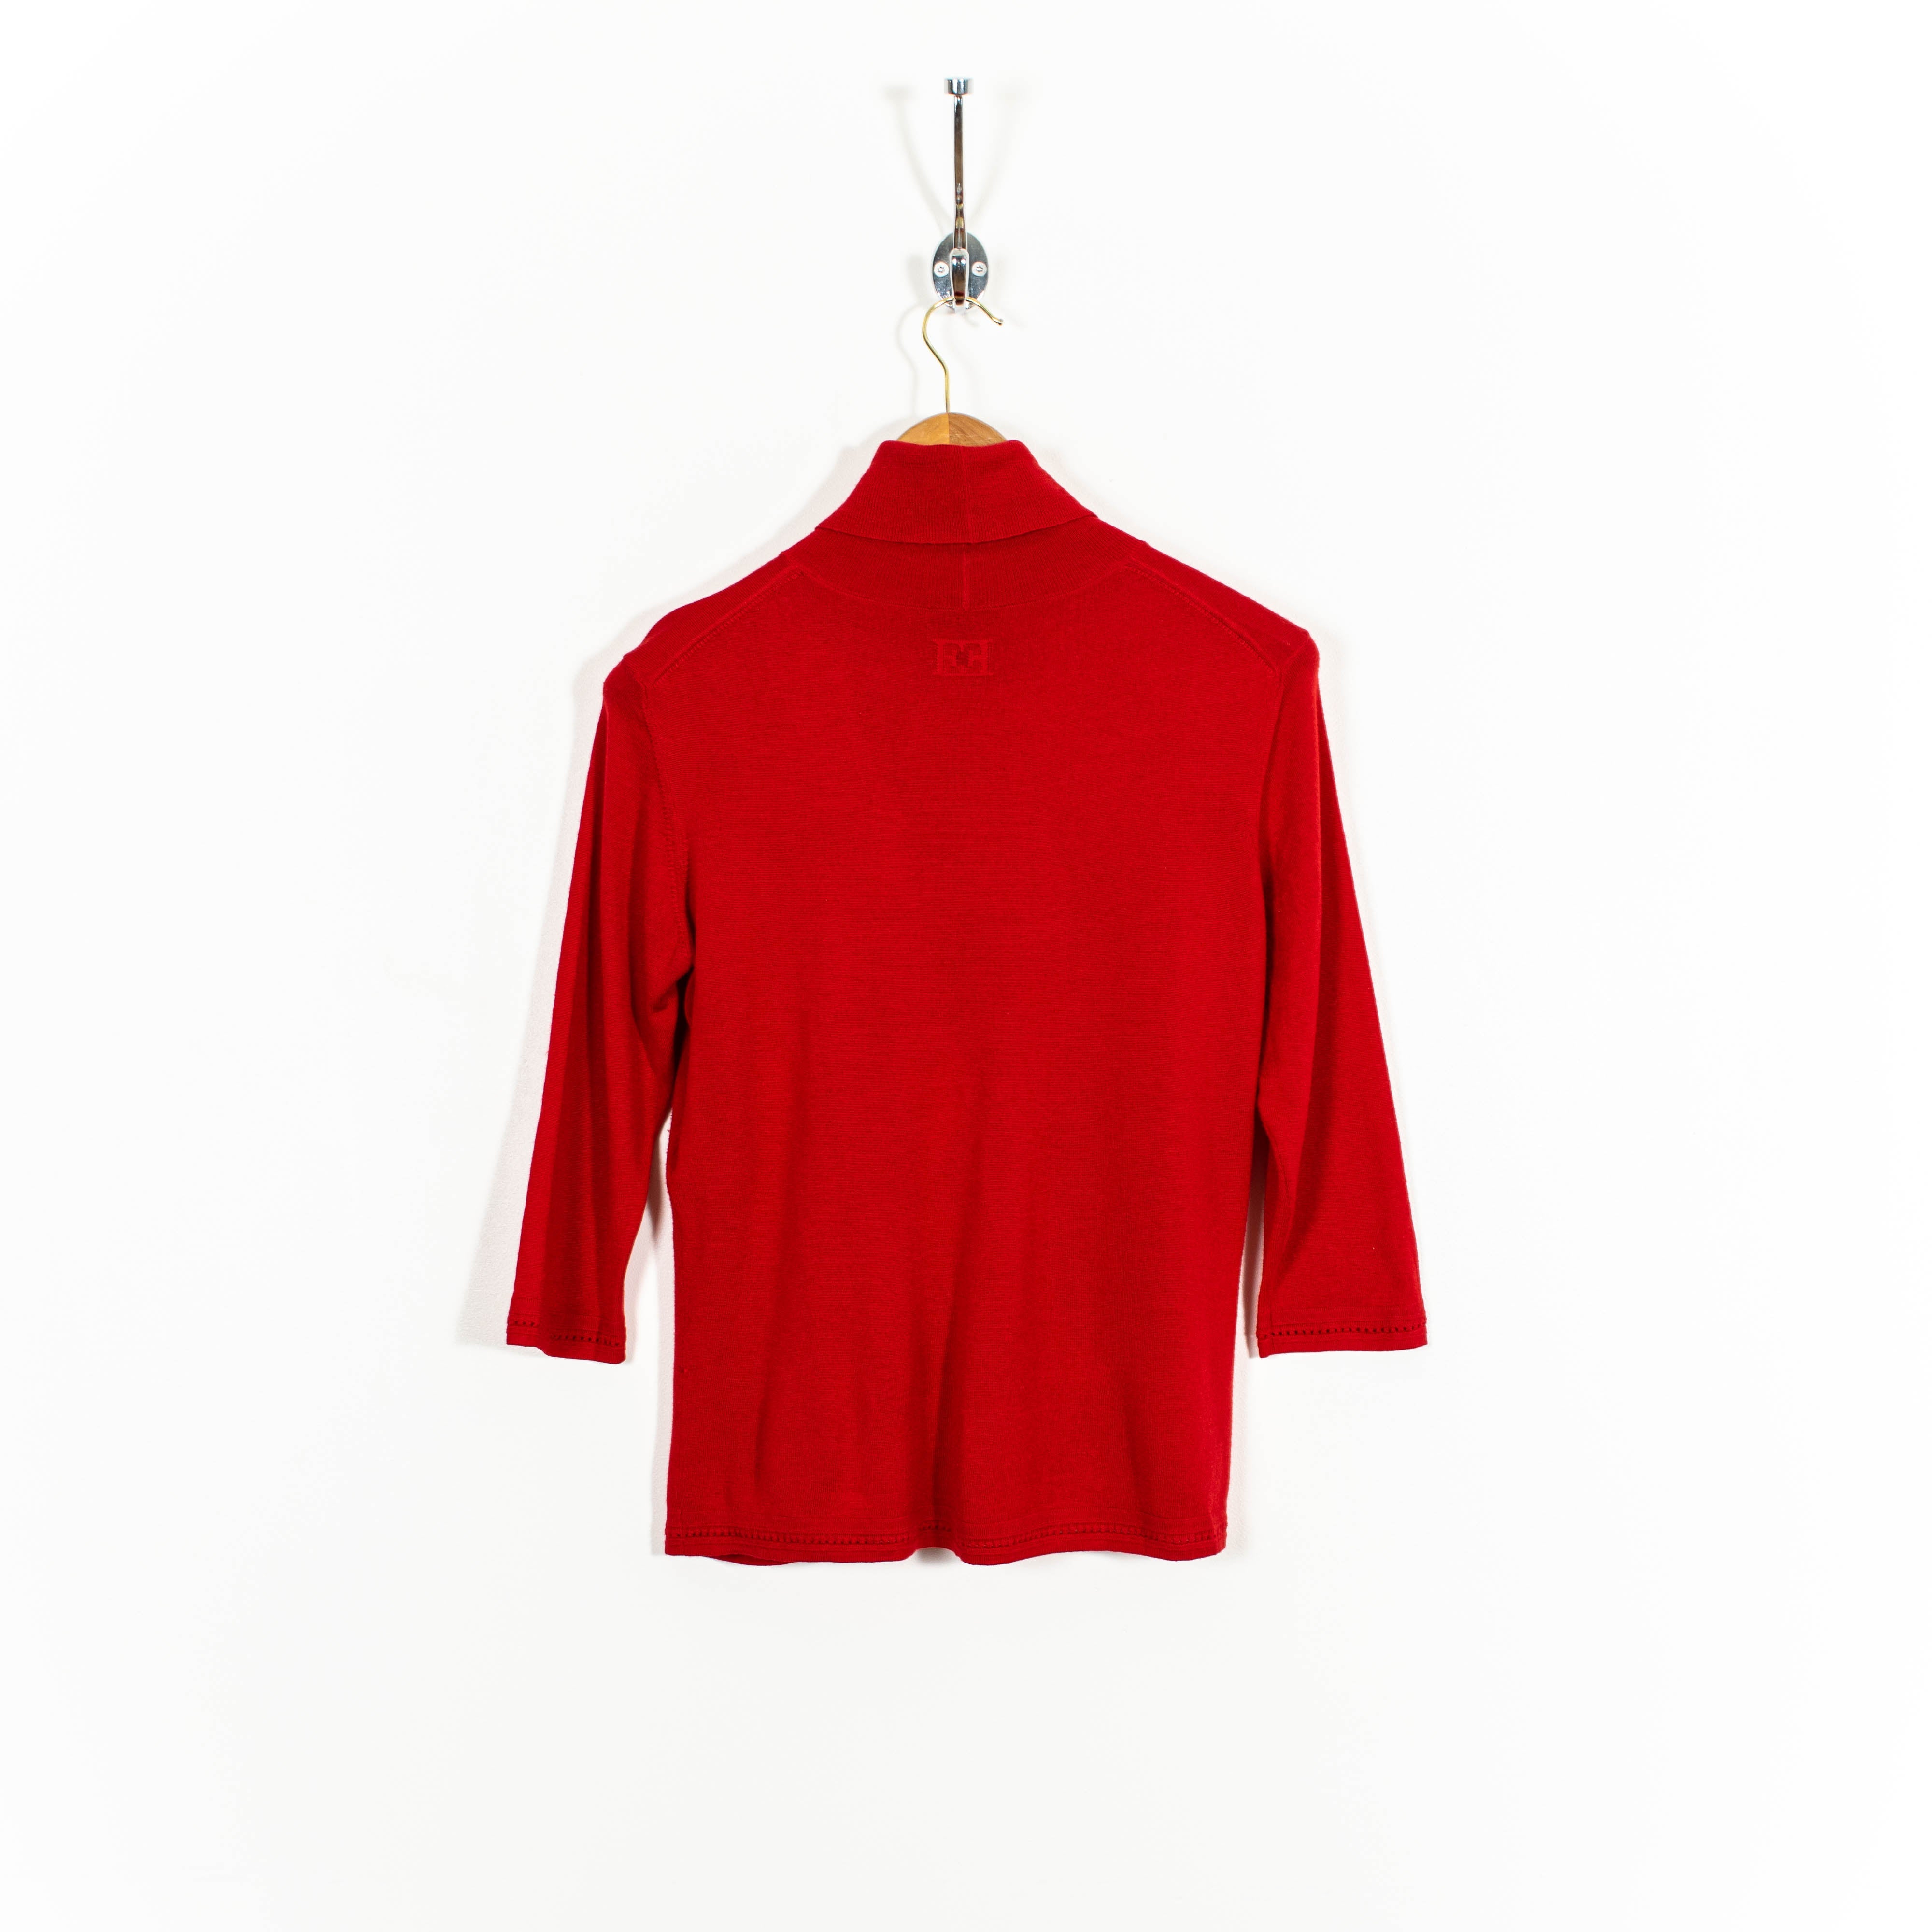 Escada Vintage Turtleneck Pullover Sweater Wool Silk Blend Red Womens S